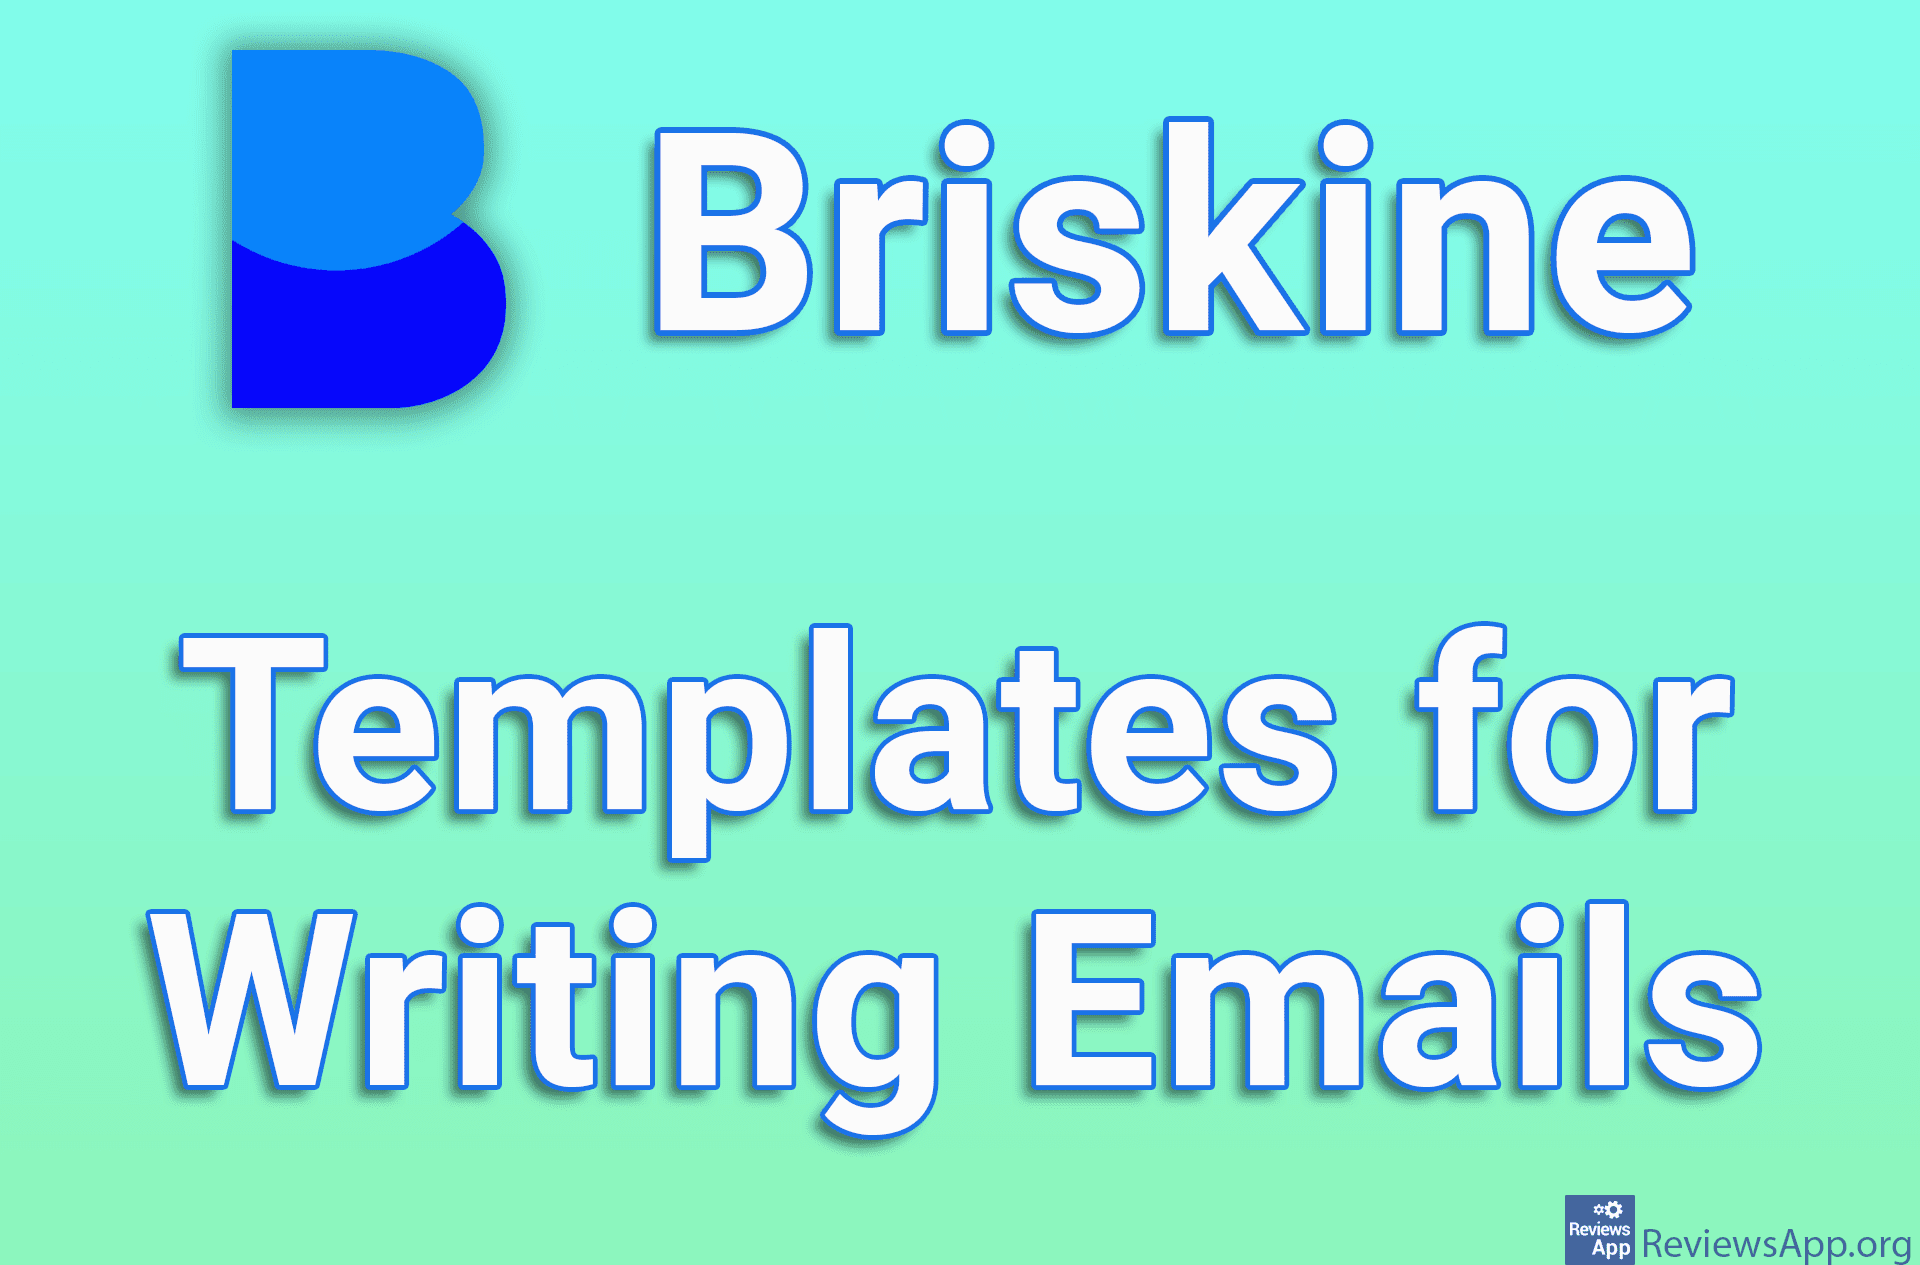 Briskine – Templates for Writing Emails